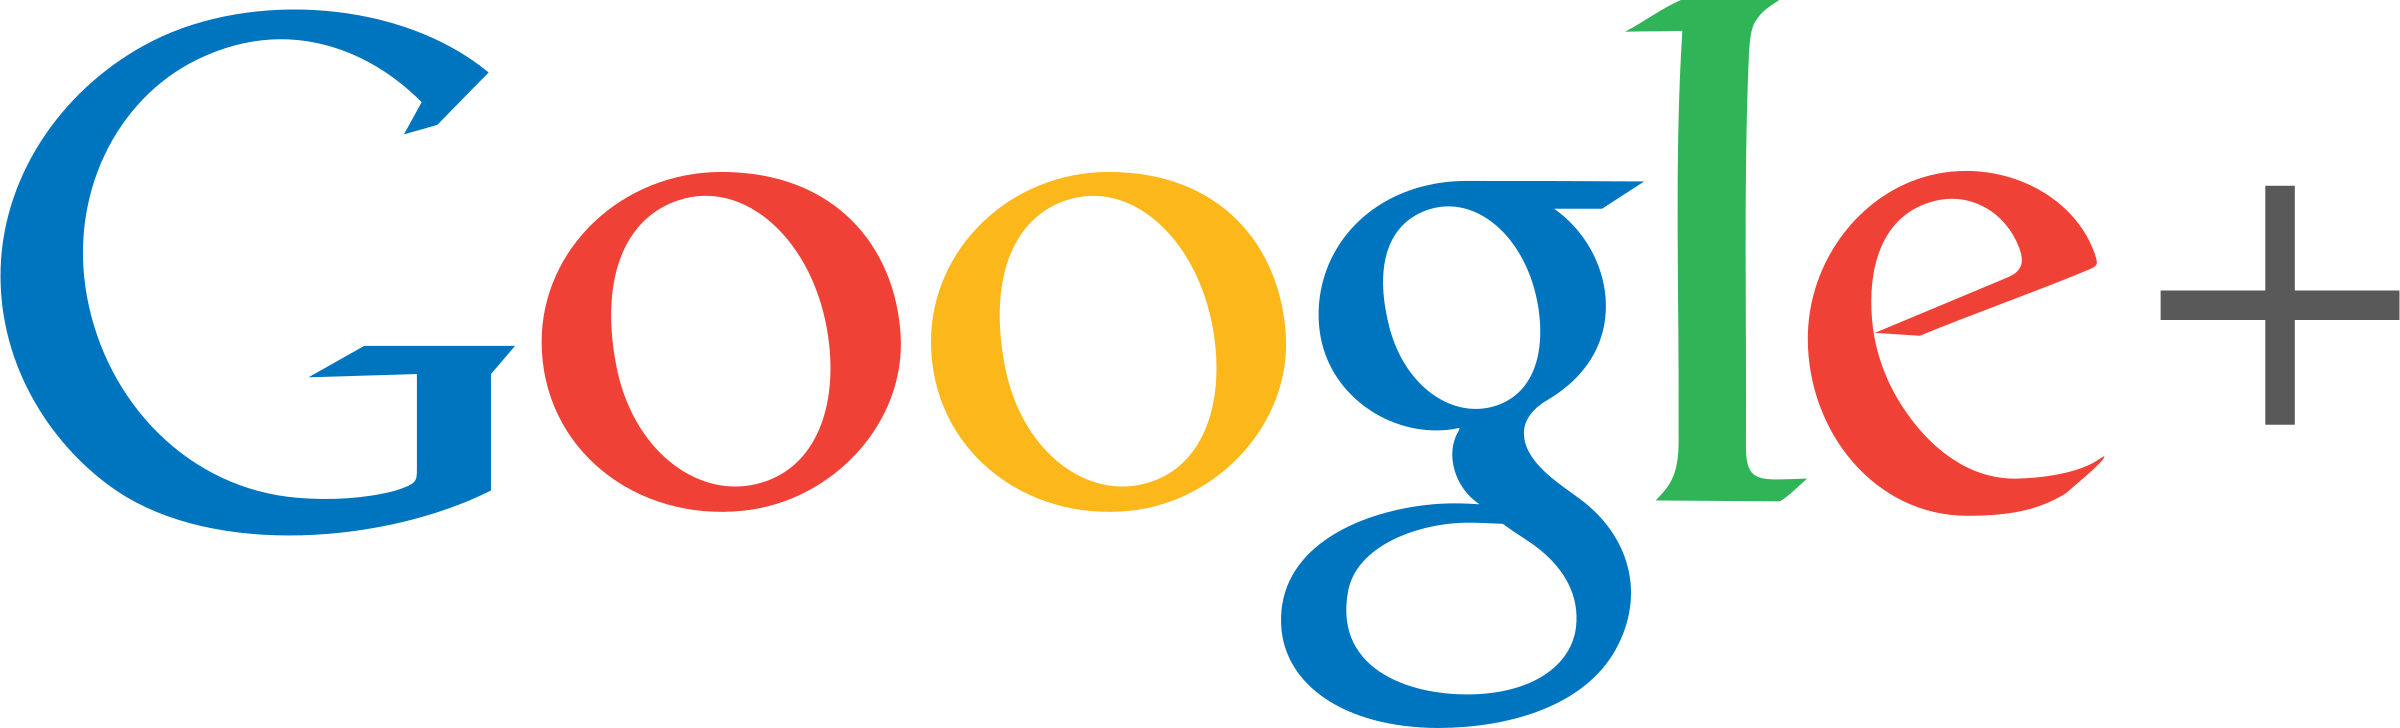 Goggle Plus Logo - Google Plus Logo PNG Transparent & SVG Vector - Freebie Supply